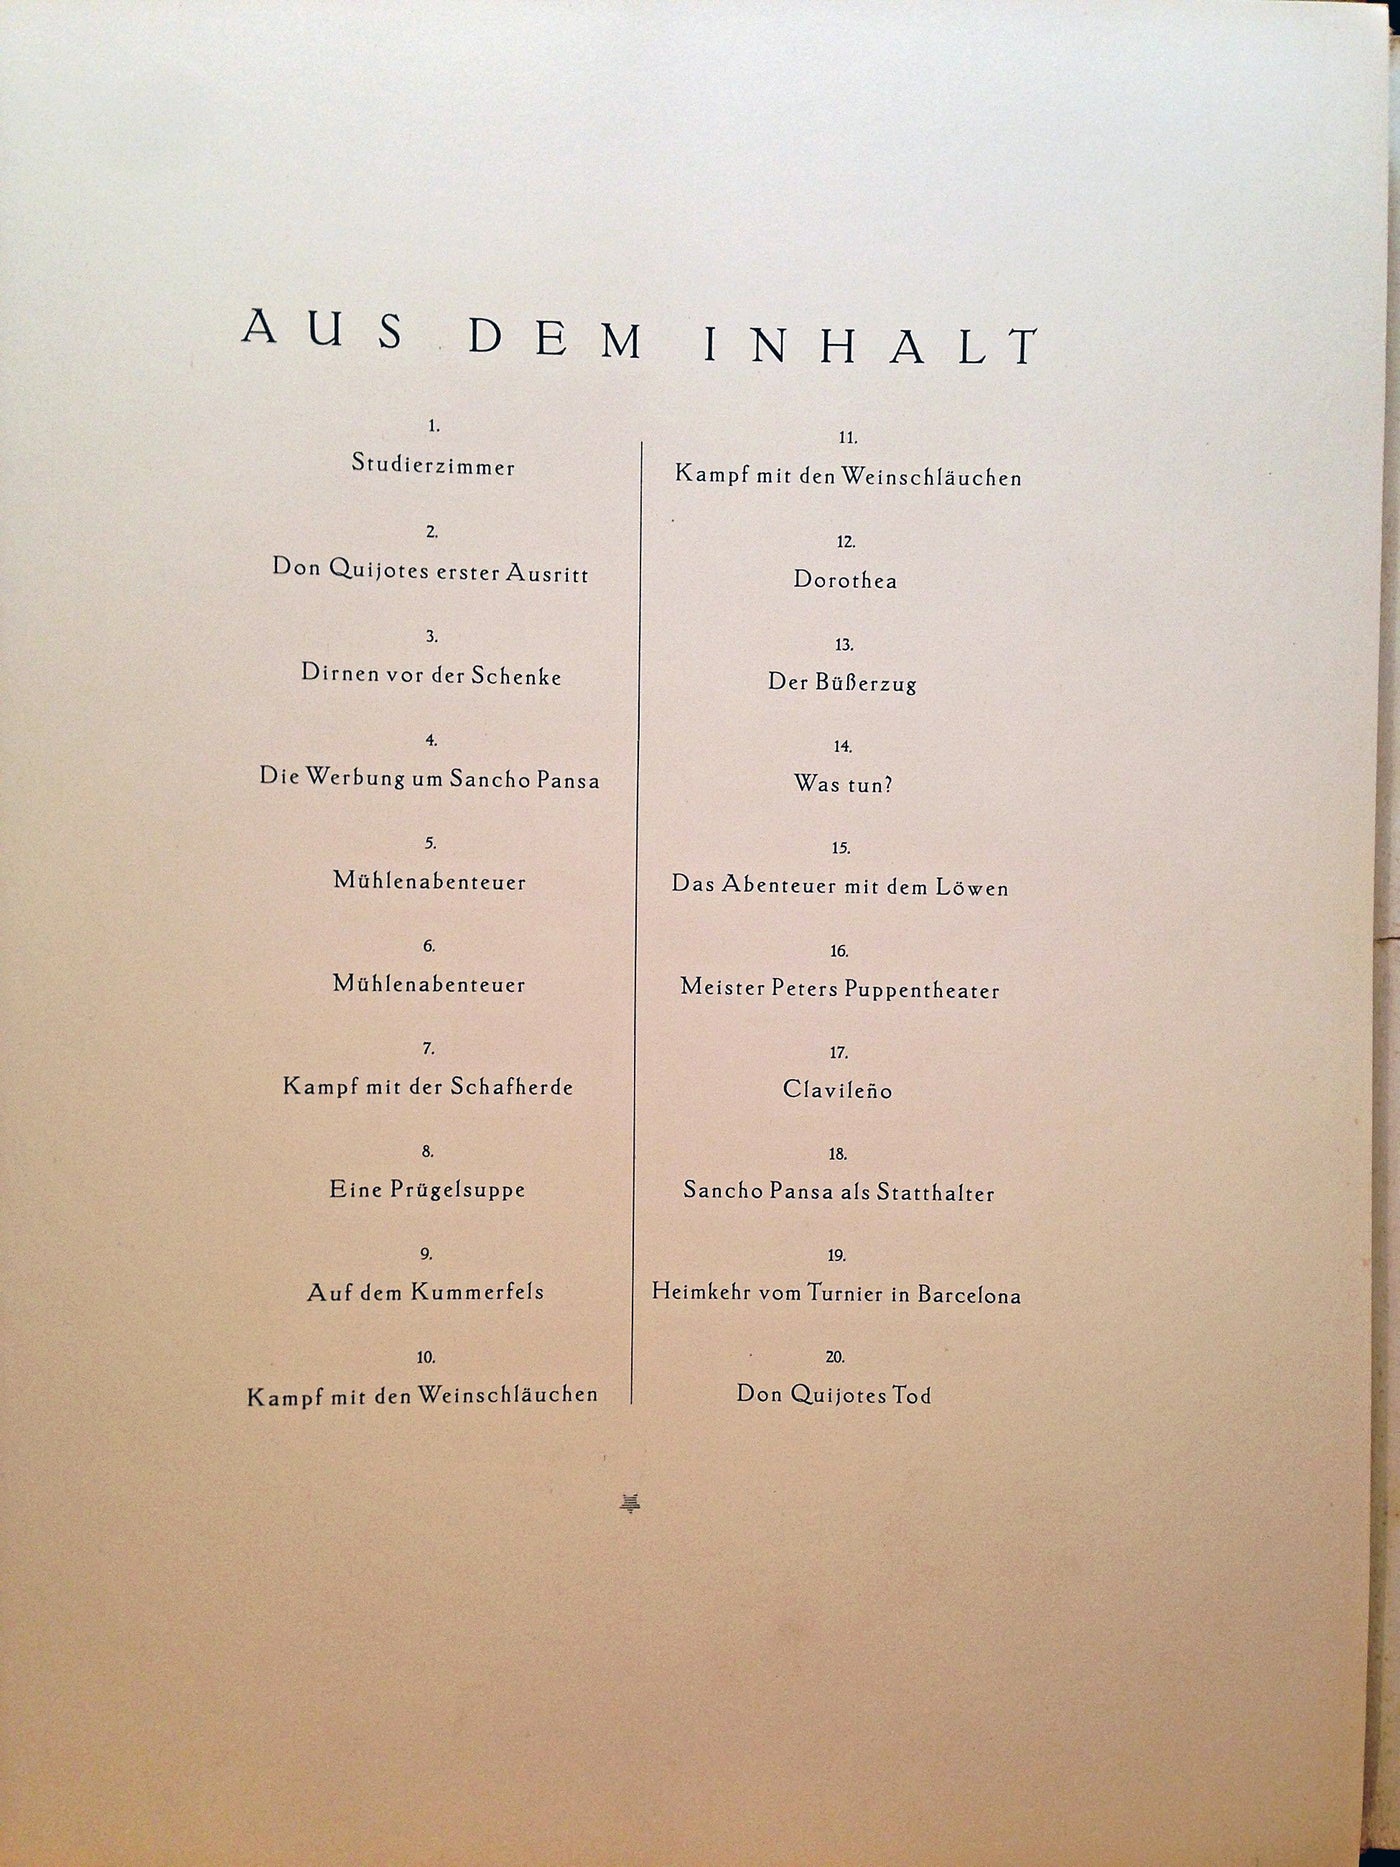 Don Quijote von der Mancha Table of Contents 1922